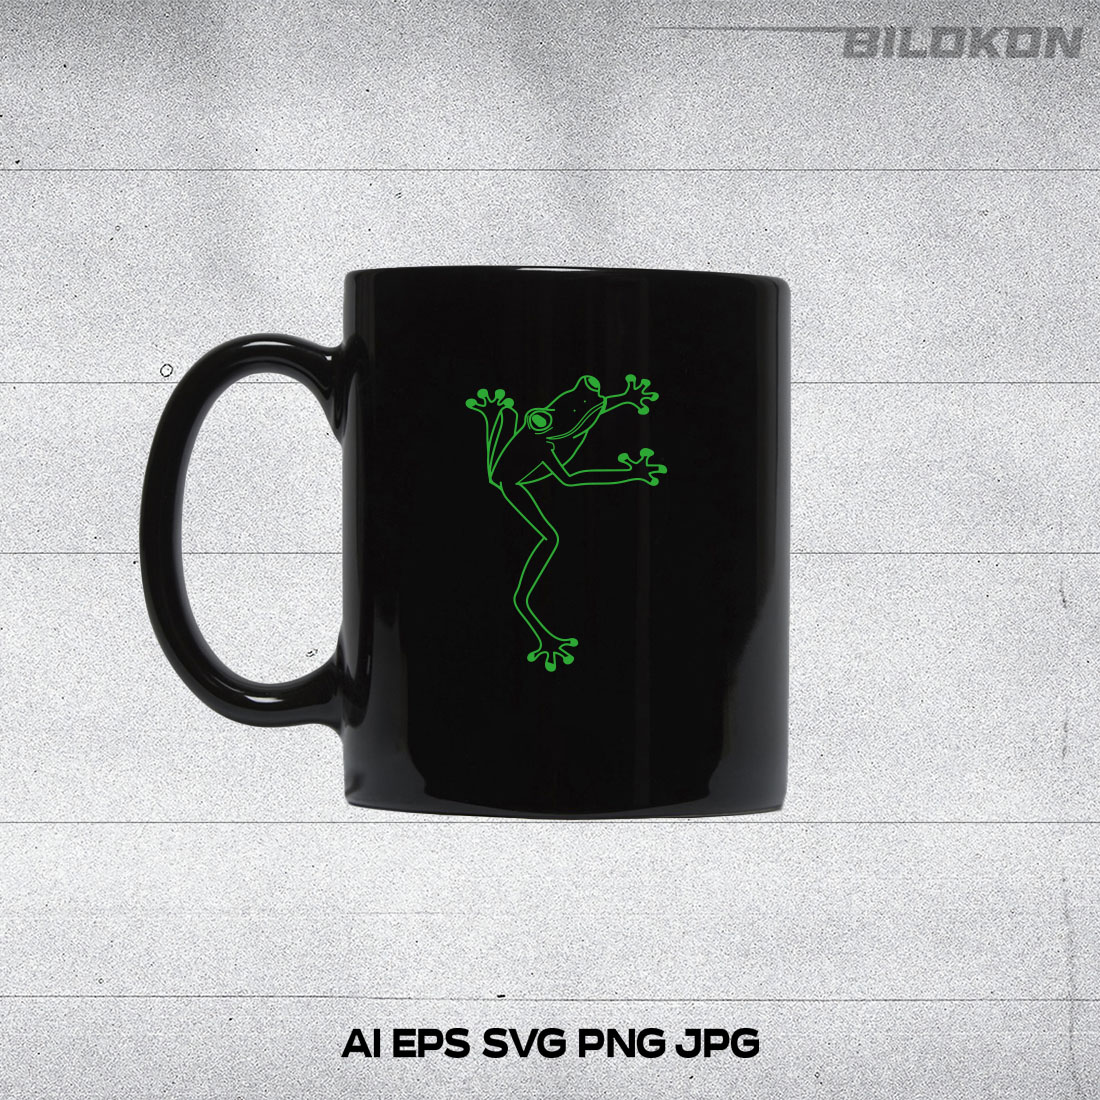 Black coffee mug with a green lizard on it.